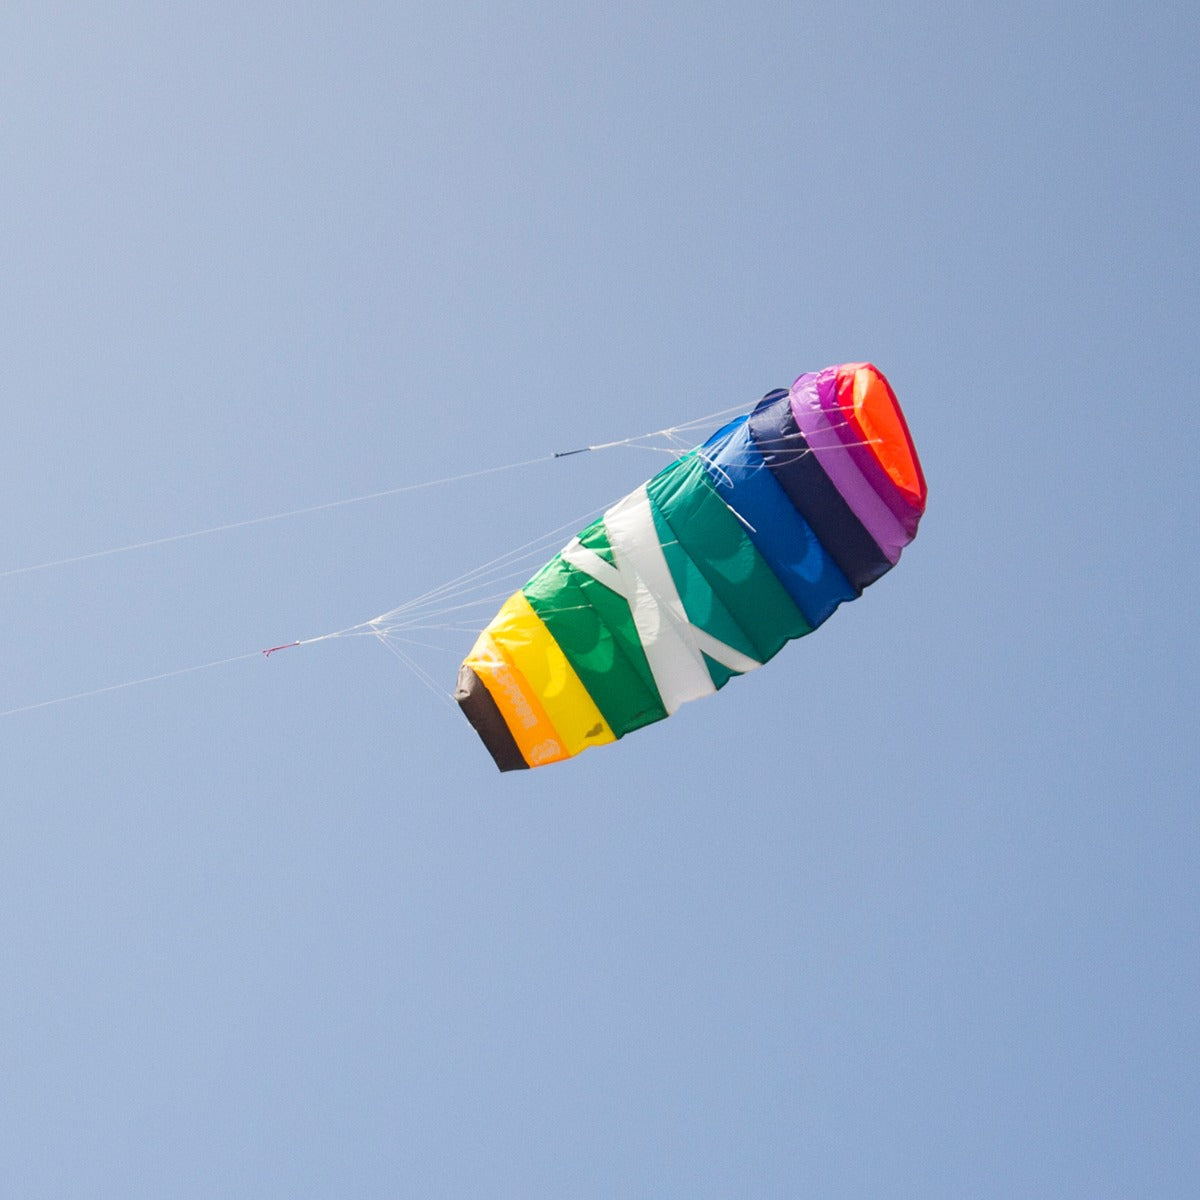 CrossKites Lenkmatte Air 1.5 Rainbow R2F Allround Lenkdrachen Kite